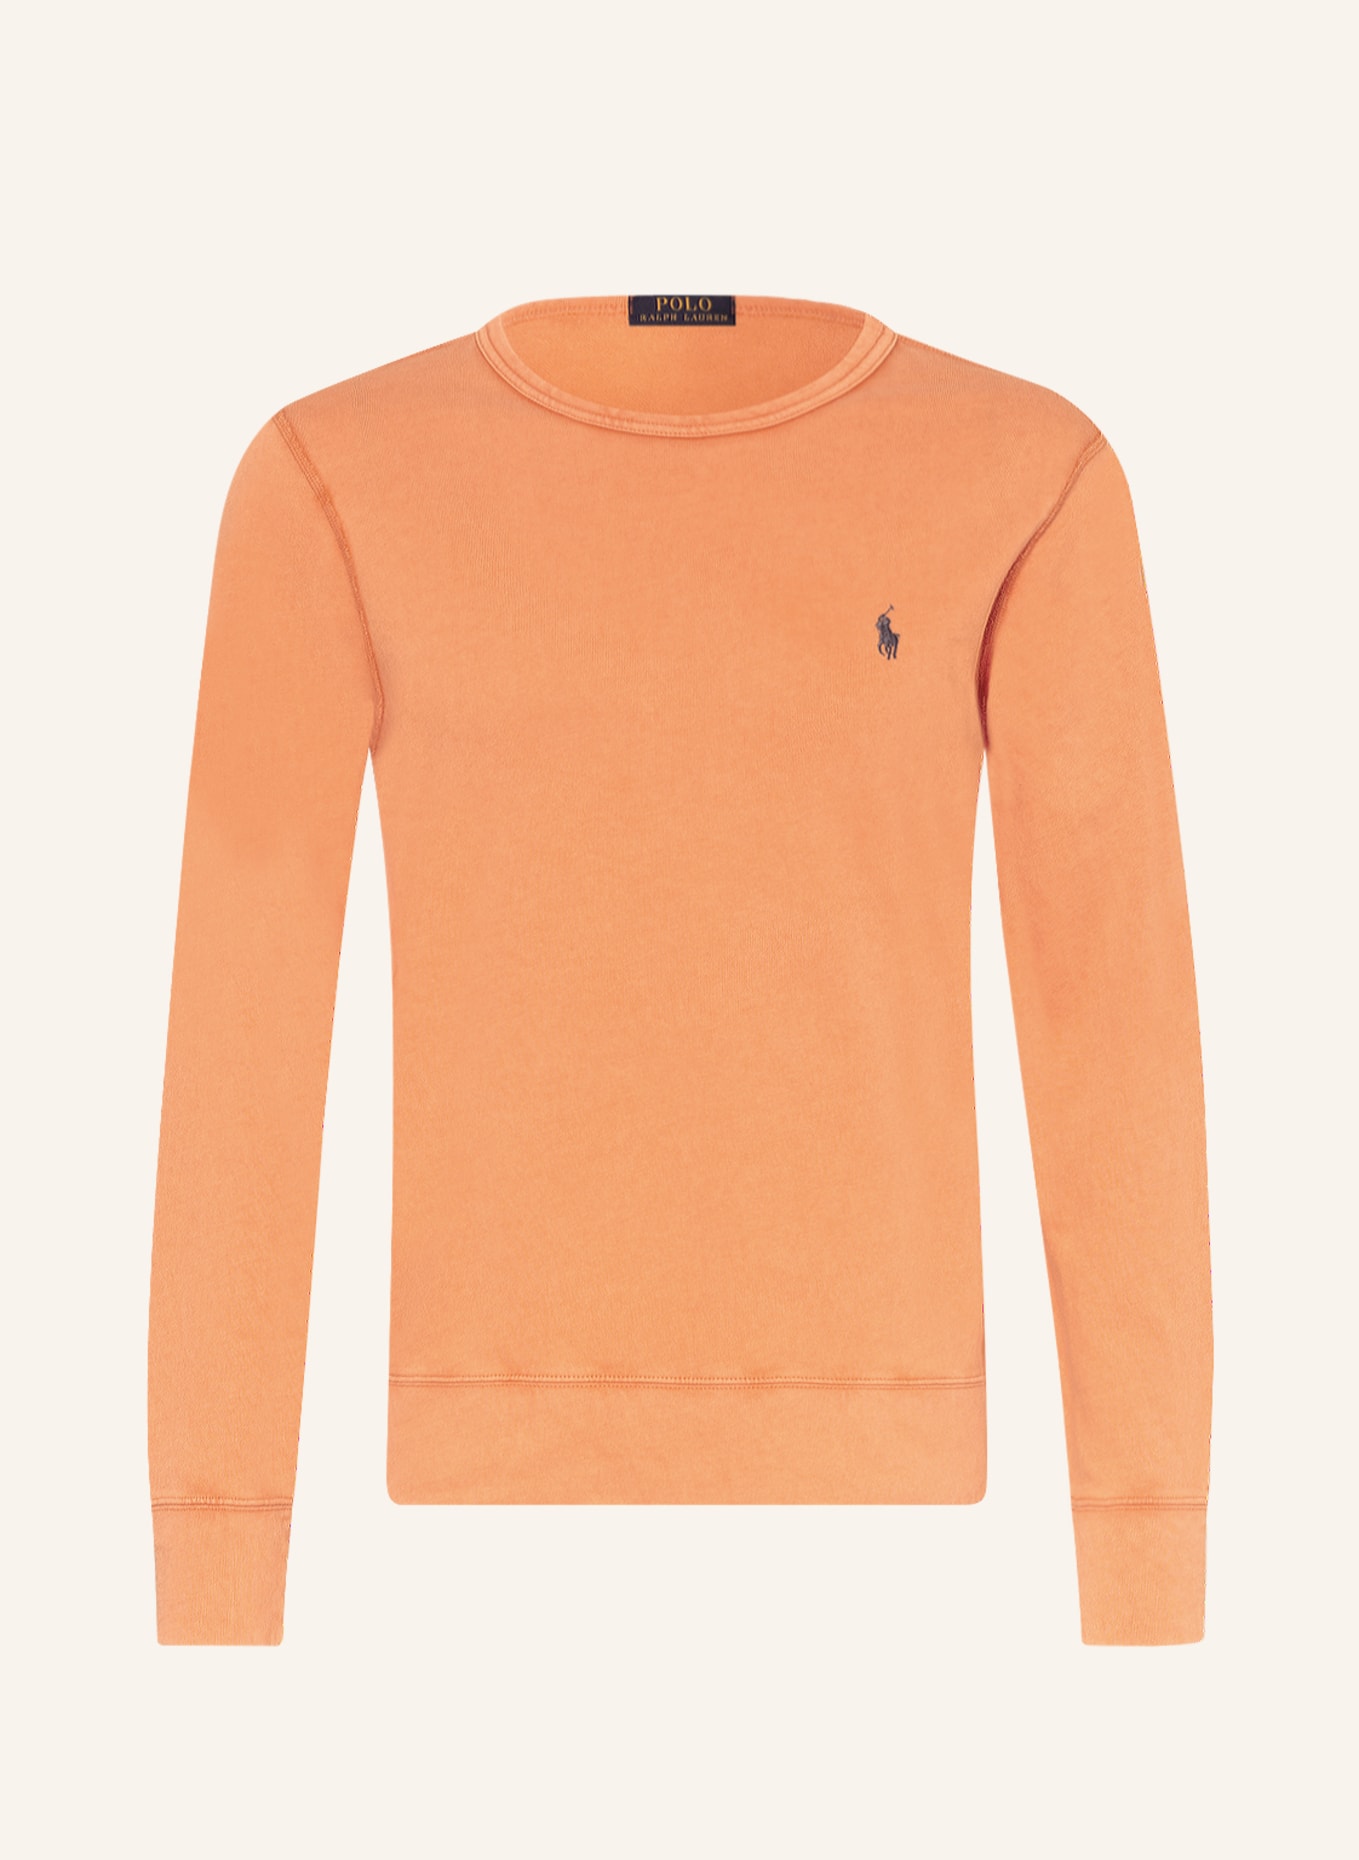 POLO RALPH LAUREN Sweatshirt, Farbe: ORANGE (Bild 1)